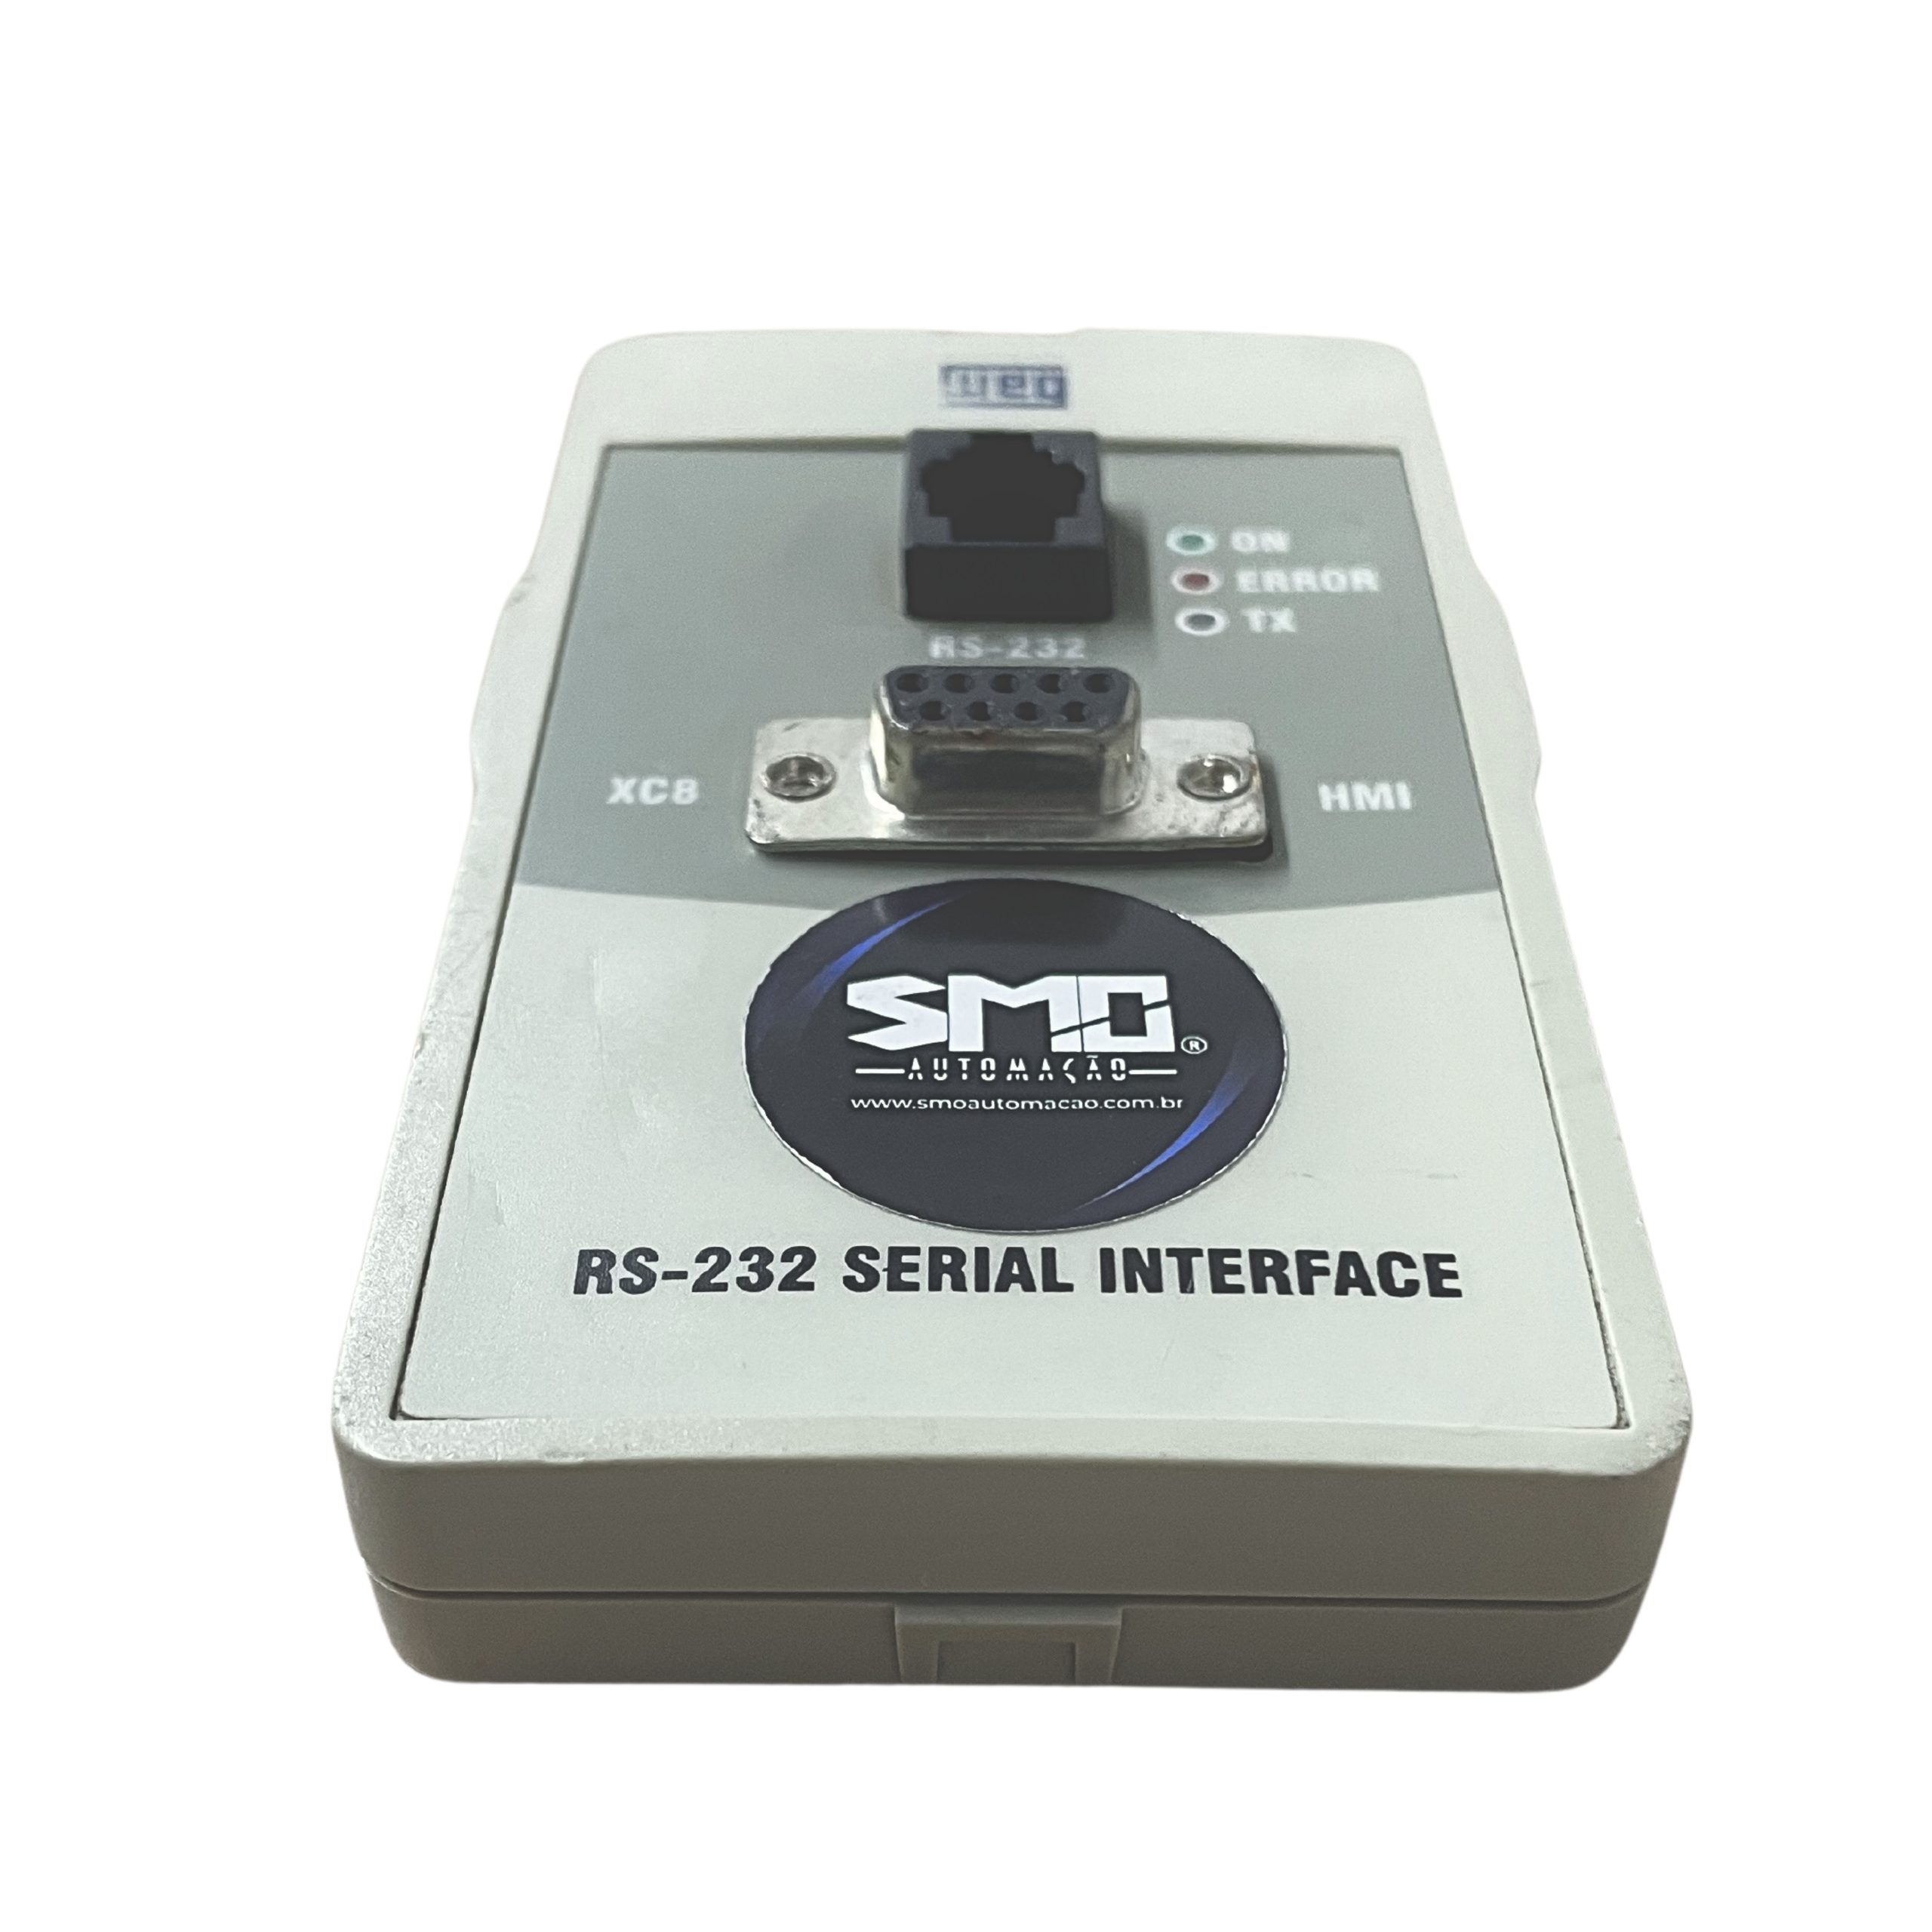 INTERFACE SERIAL RS-232 WEG KCS-CFW09 SEMINOVO COM GARANTIA